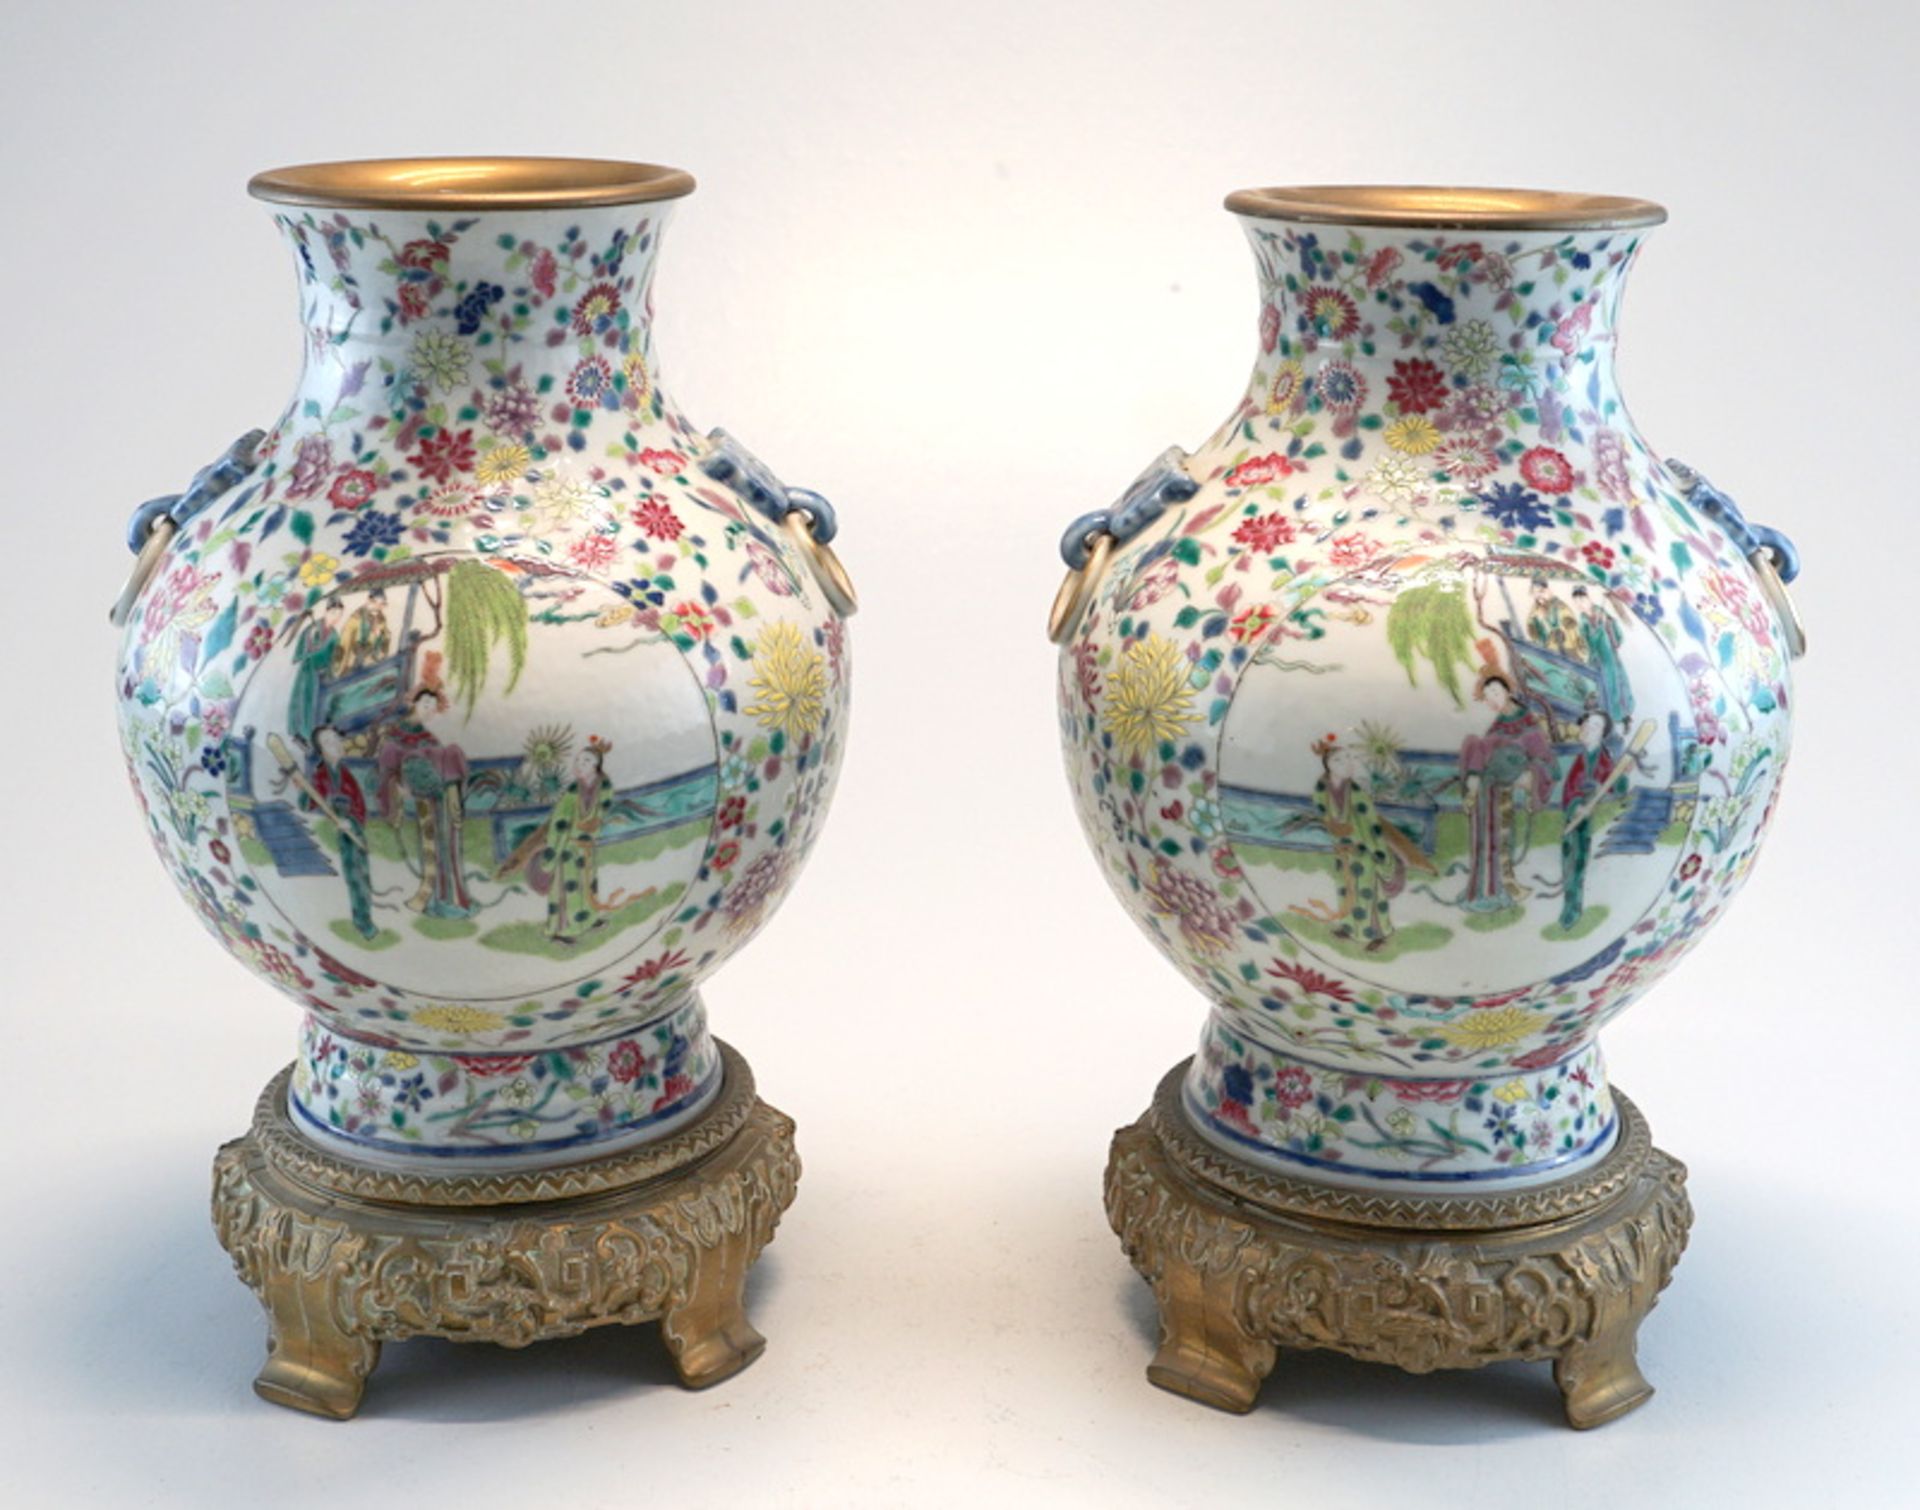 Pärchen Millefleur Vasen bronzemontiert China Kangxi Marke 18/19 Jh. - Bild 5 aus 5